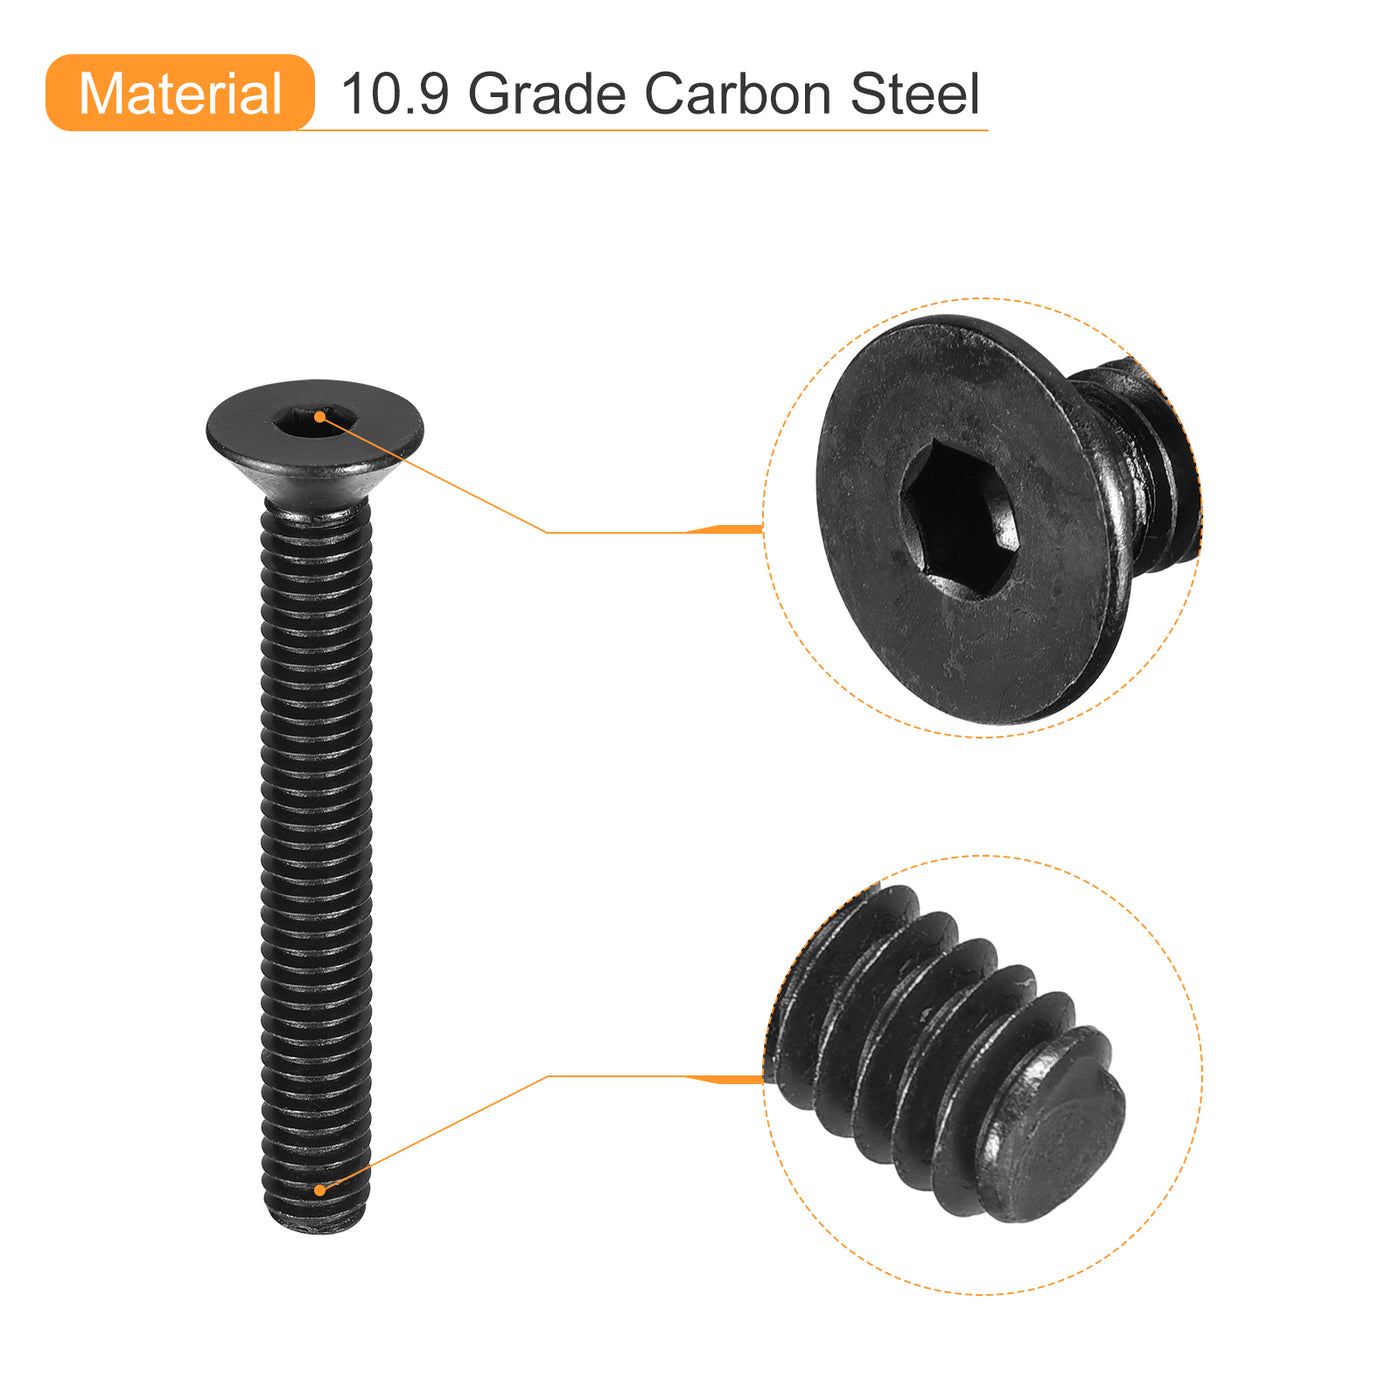 uxcell Uxcell 5/16-18x3" Flat Head Socket Cap Screws, 10.9 Grade Carbon Steel, 15PCS